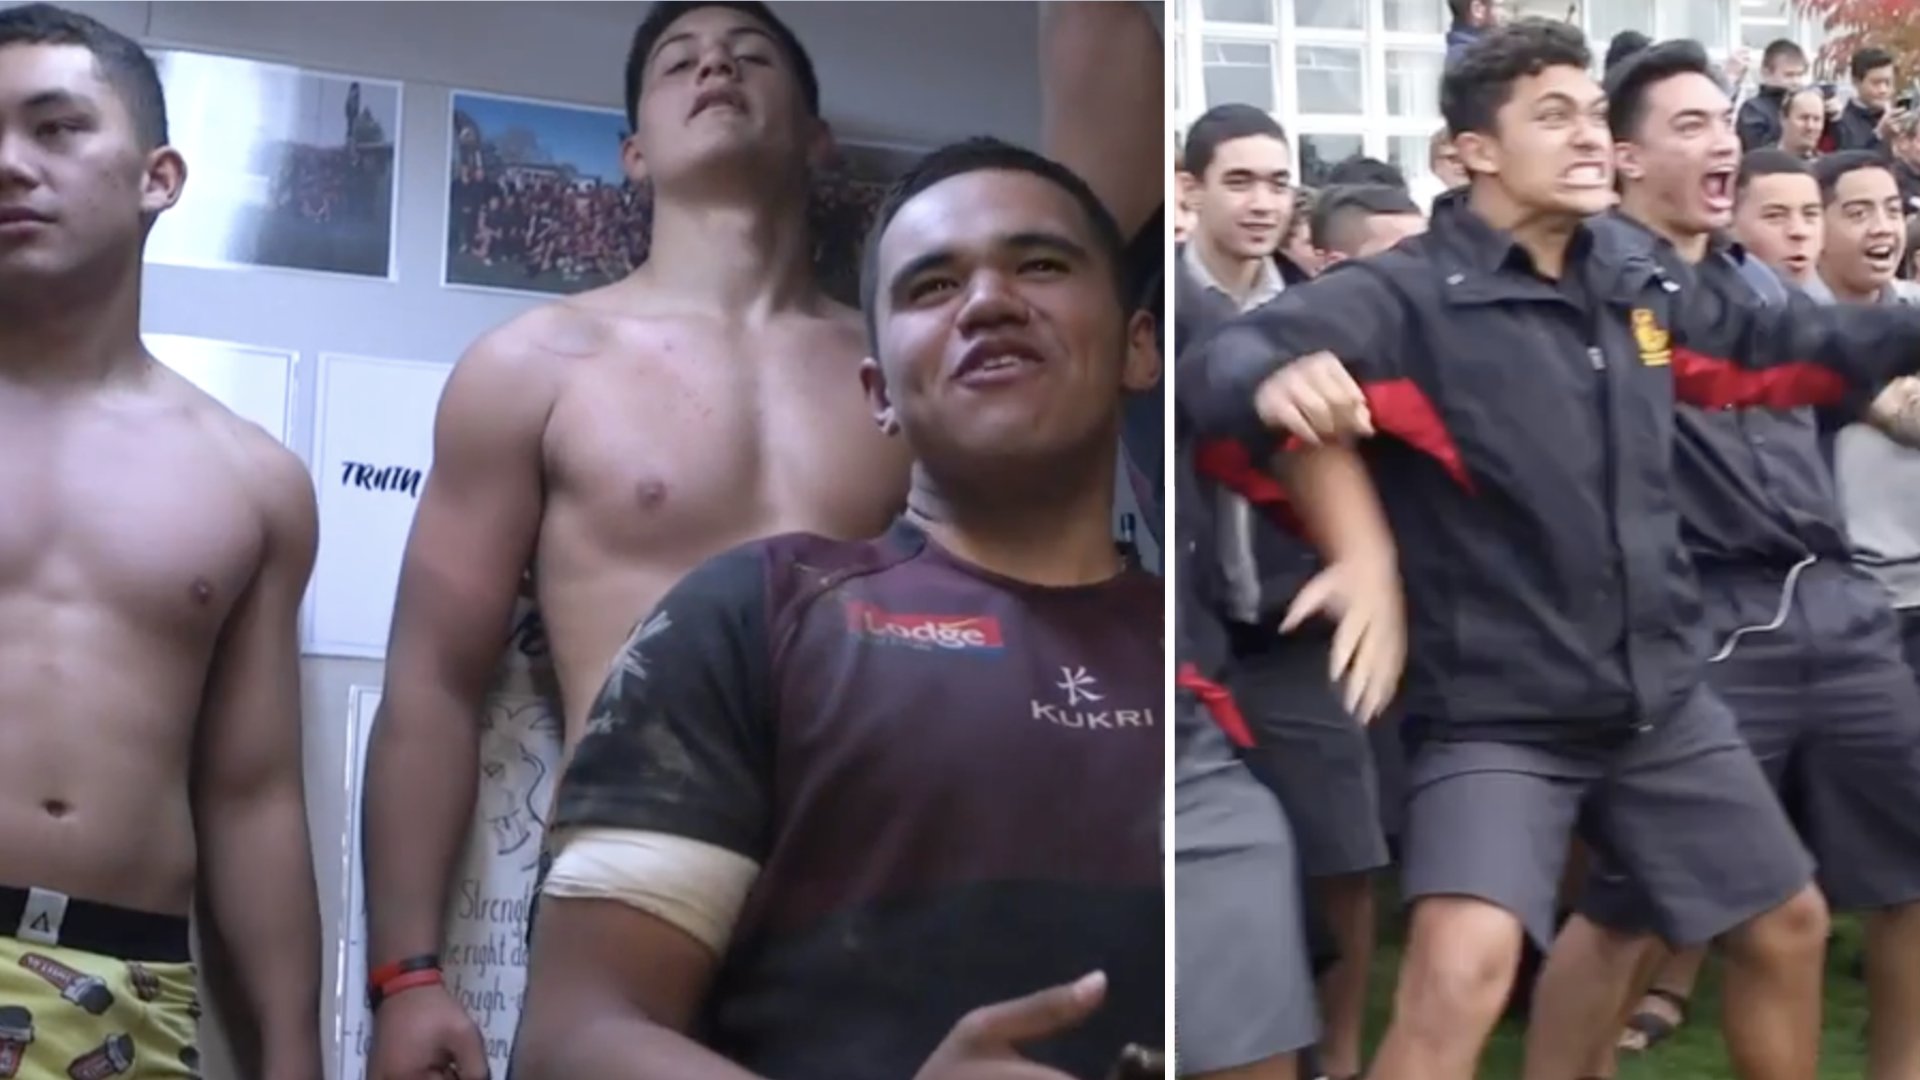 So New Zealand schoolboy rugby is insane - Hamilton Boys' Rugby